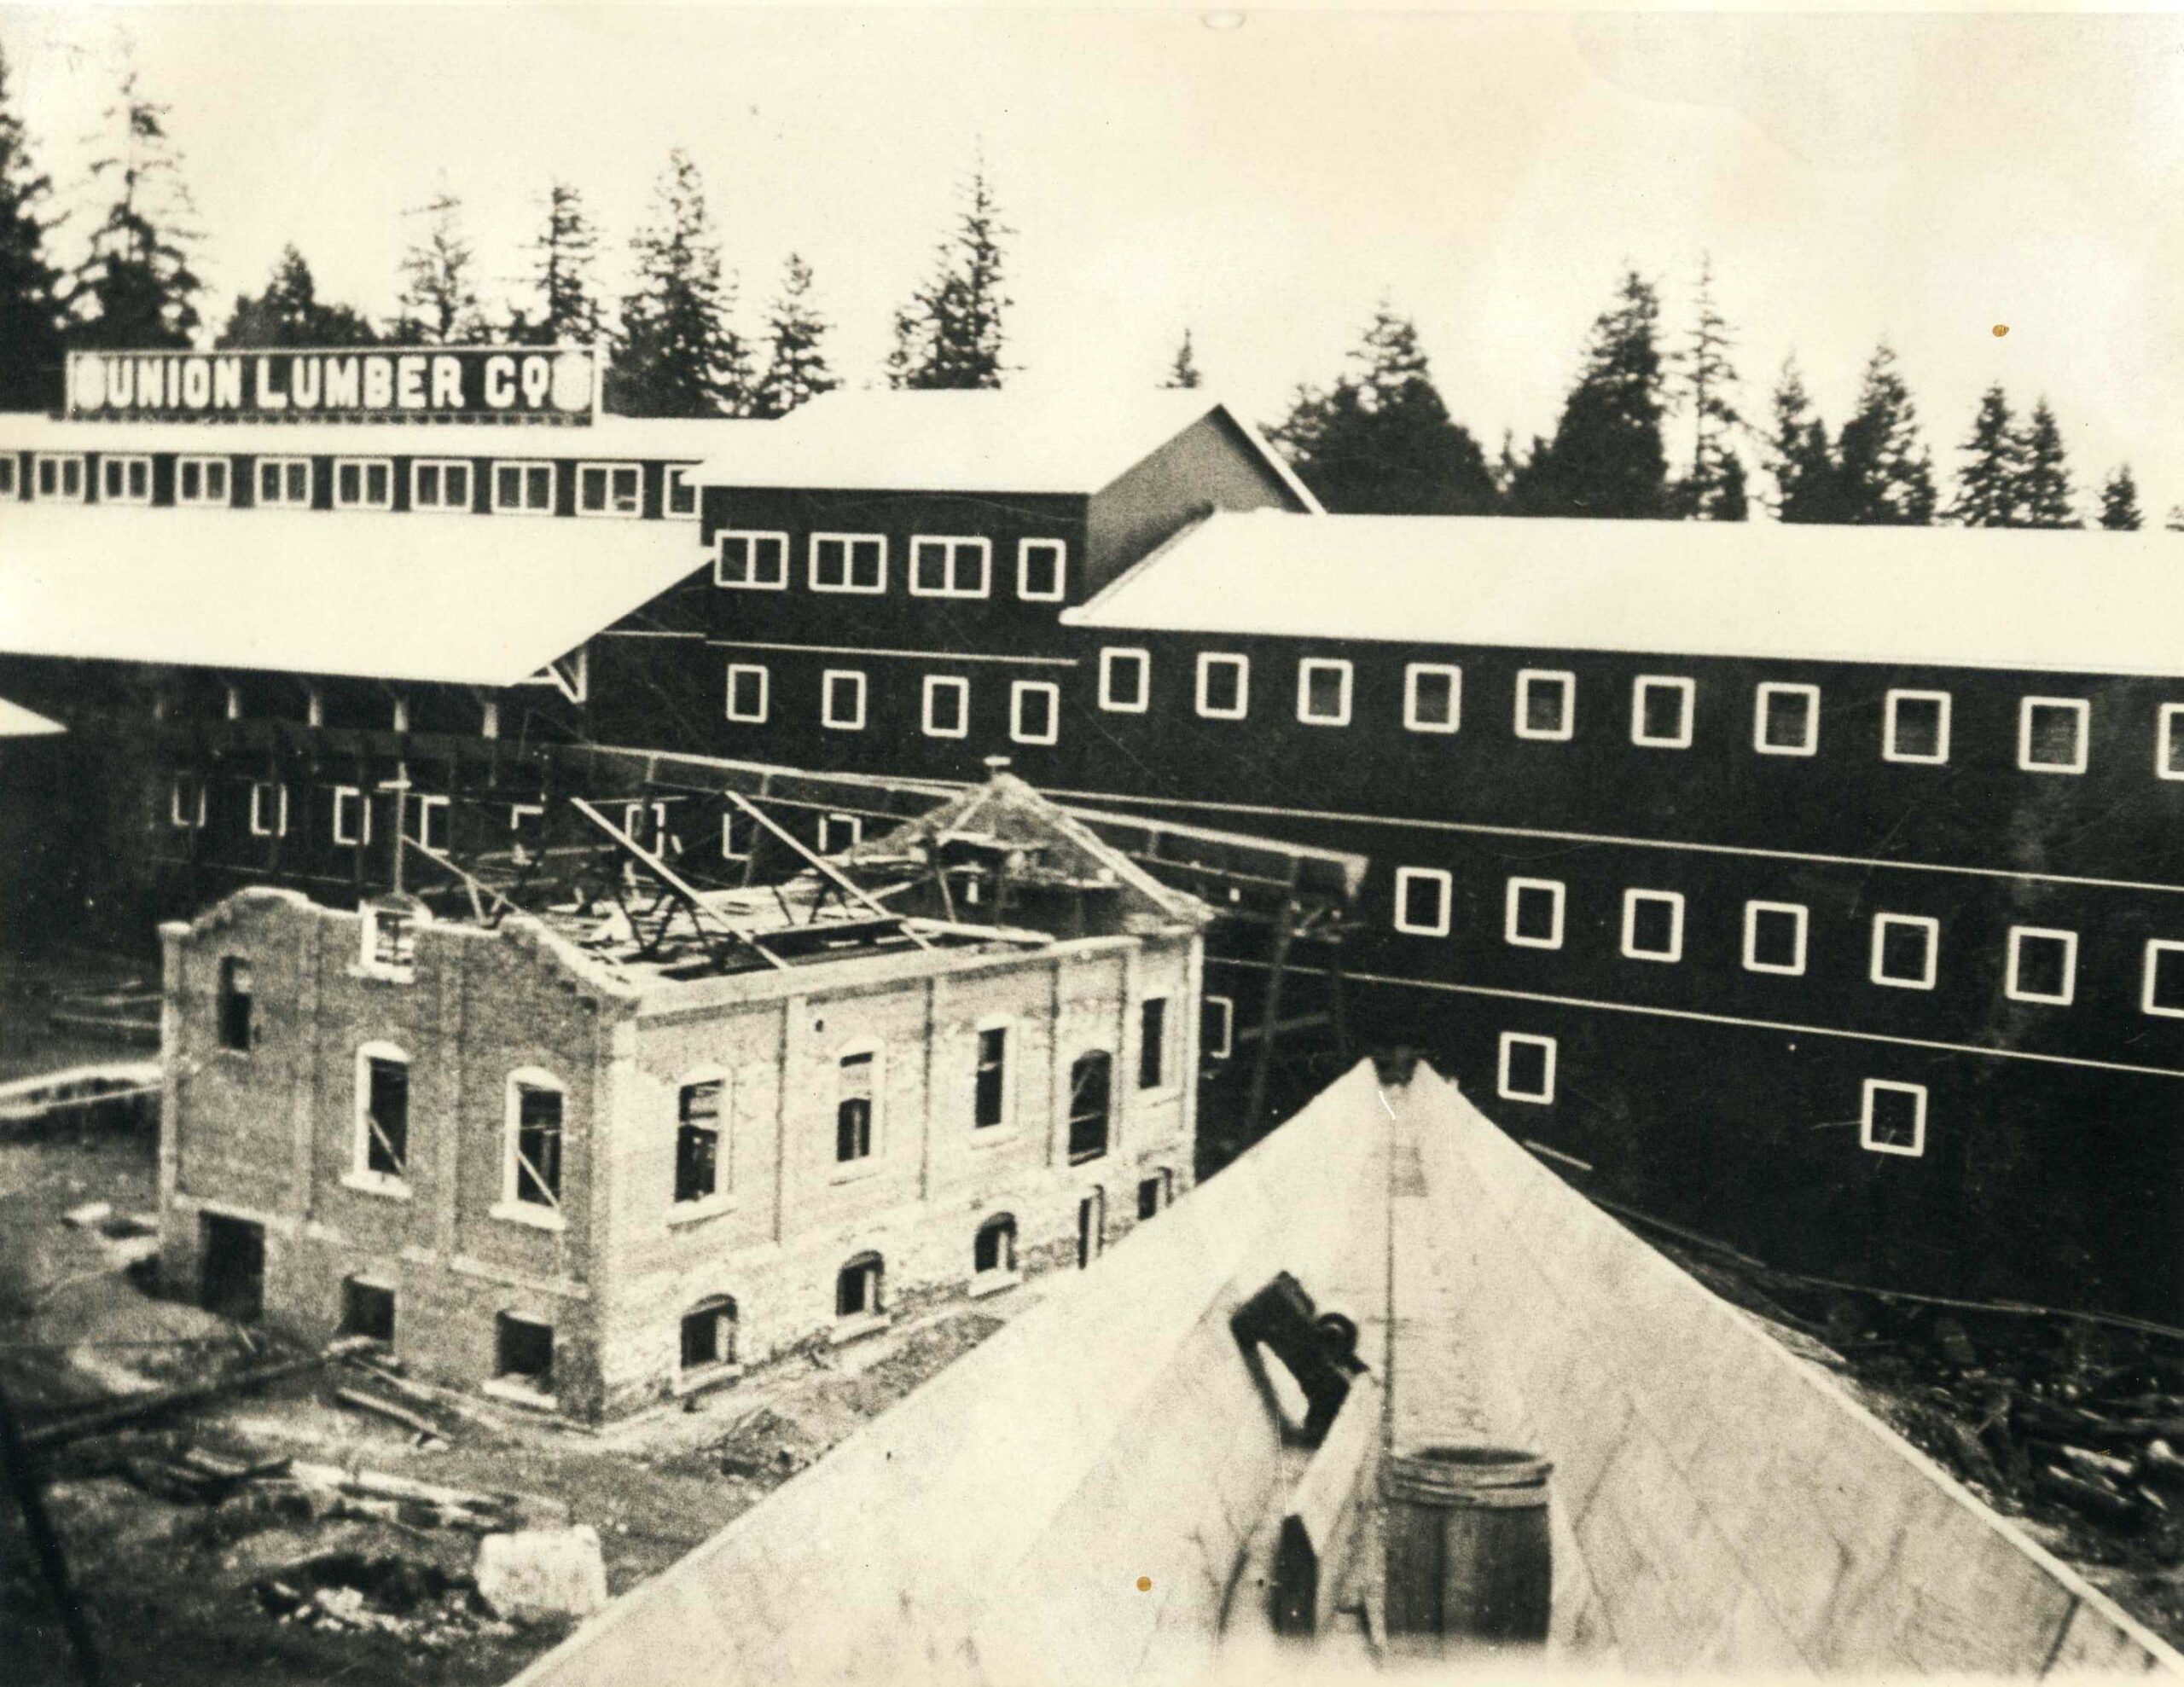 Union Lumber Company Hotel/Dormitory, c. 1910